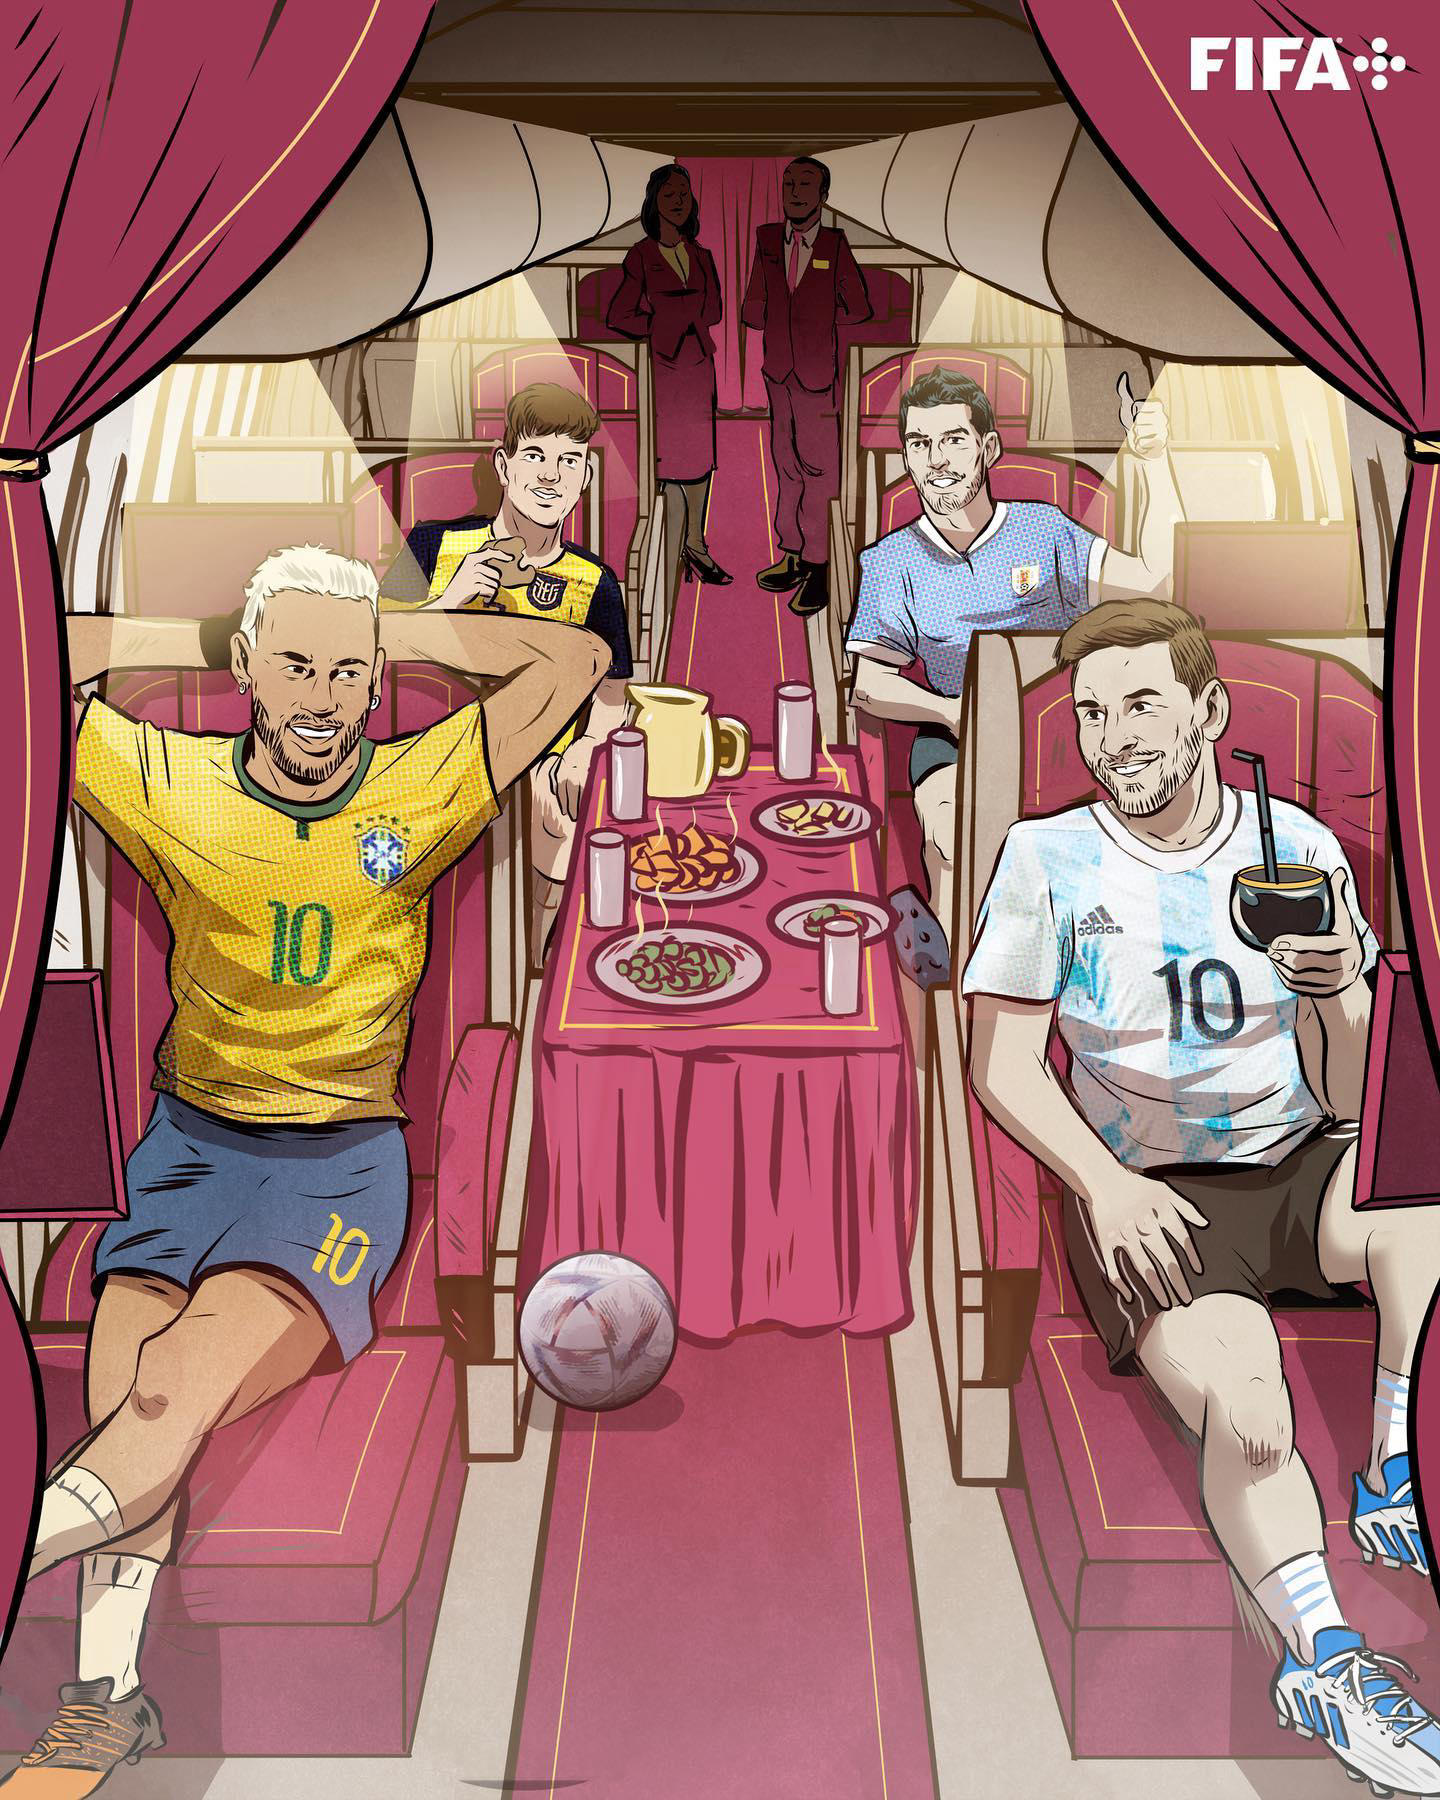 FIFA World Cup - On their way to #Qatar2022